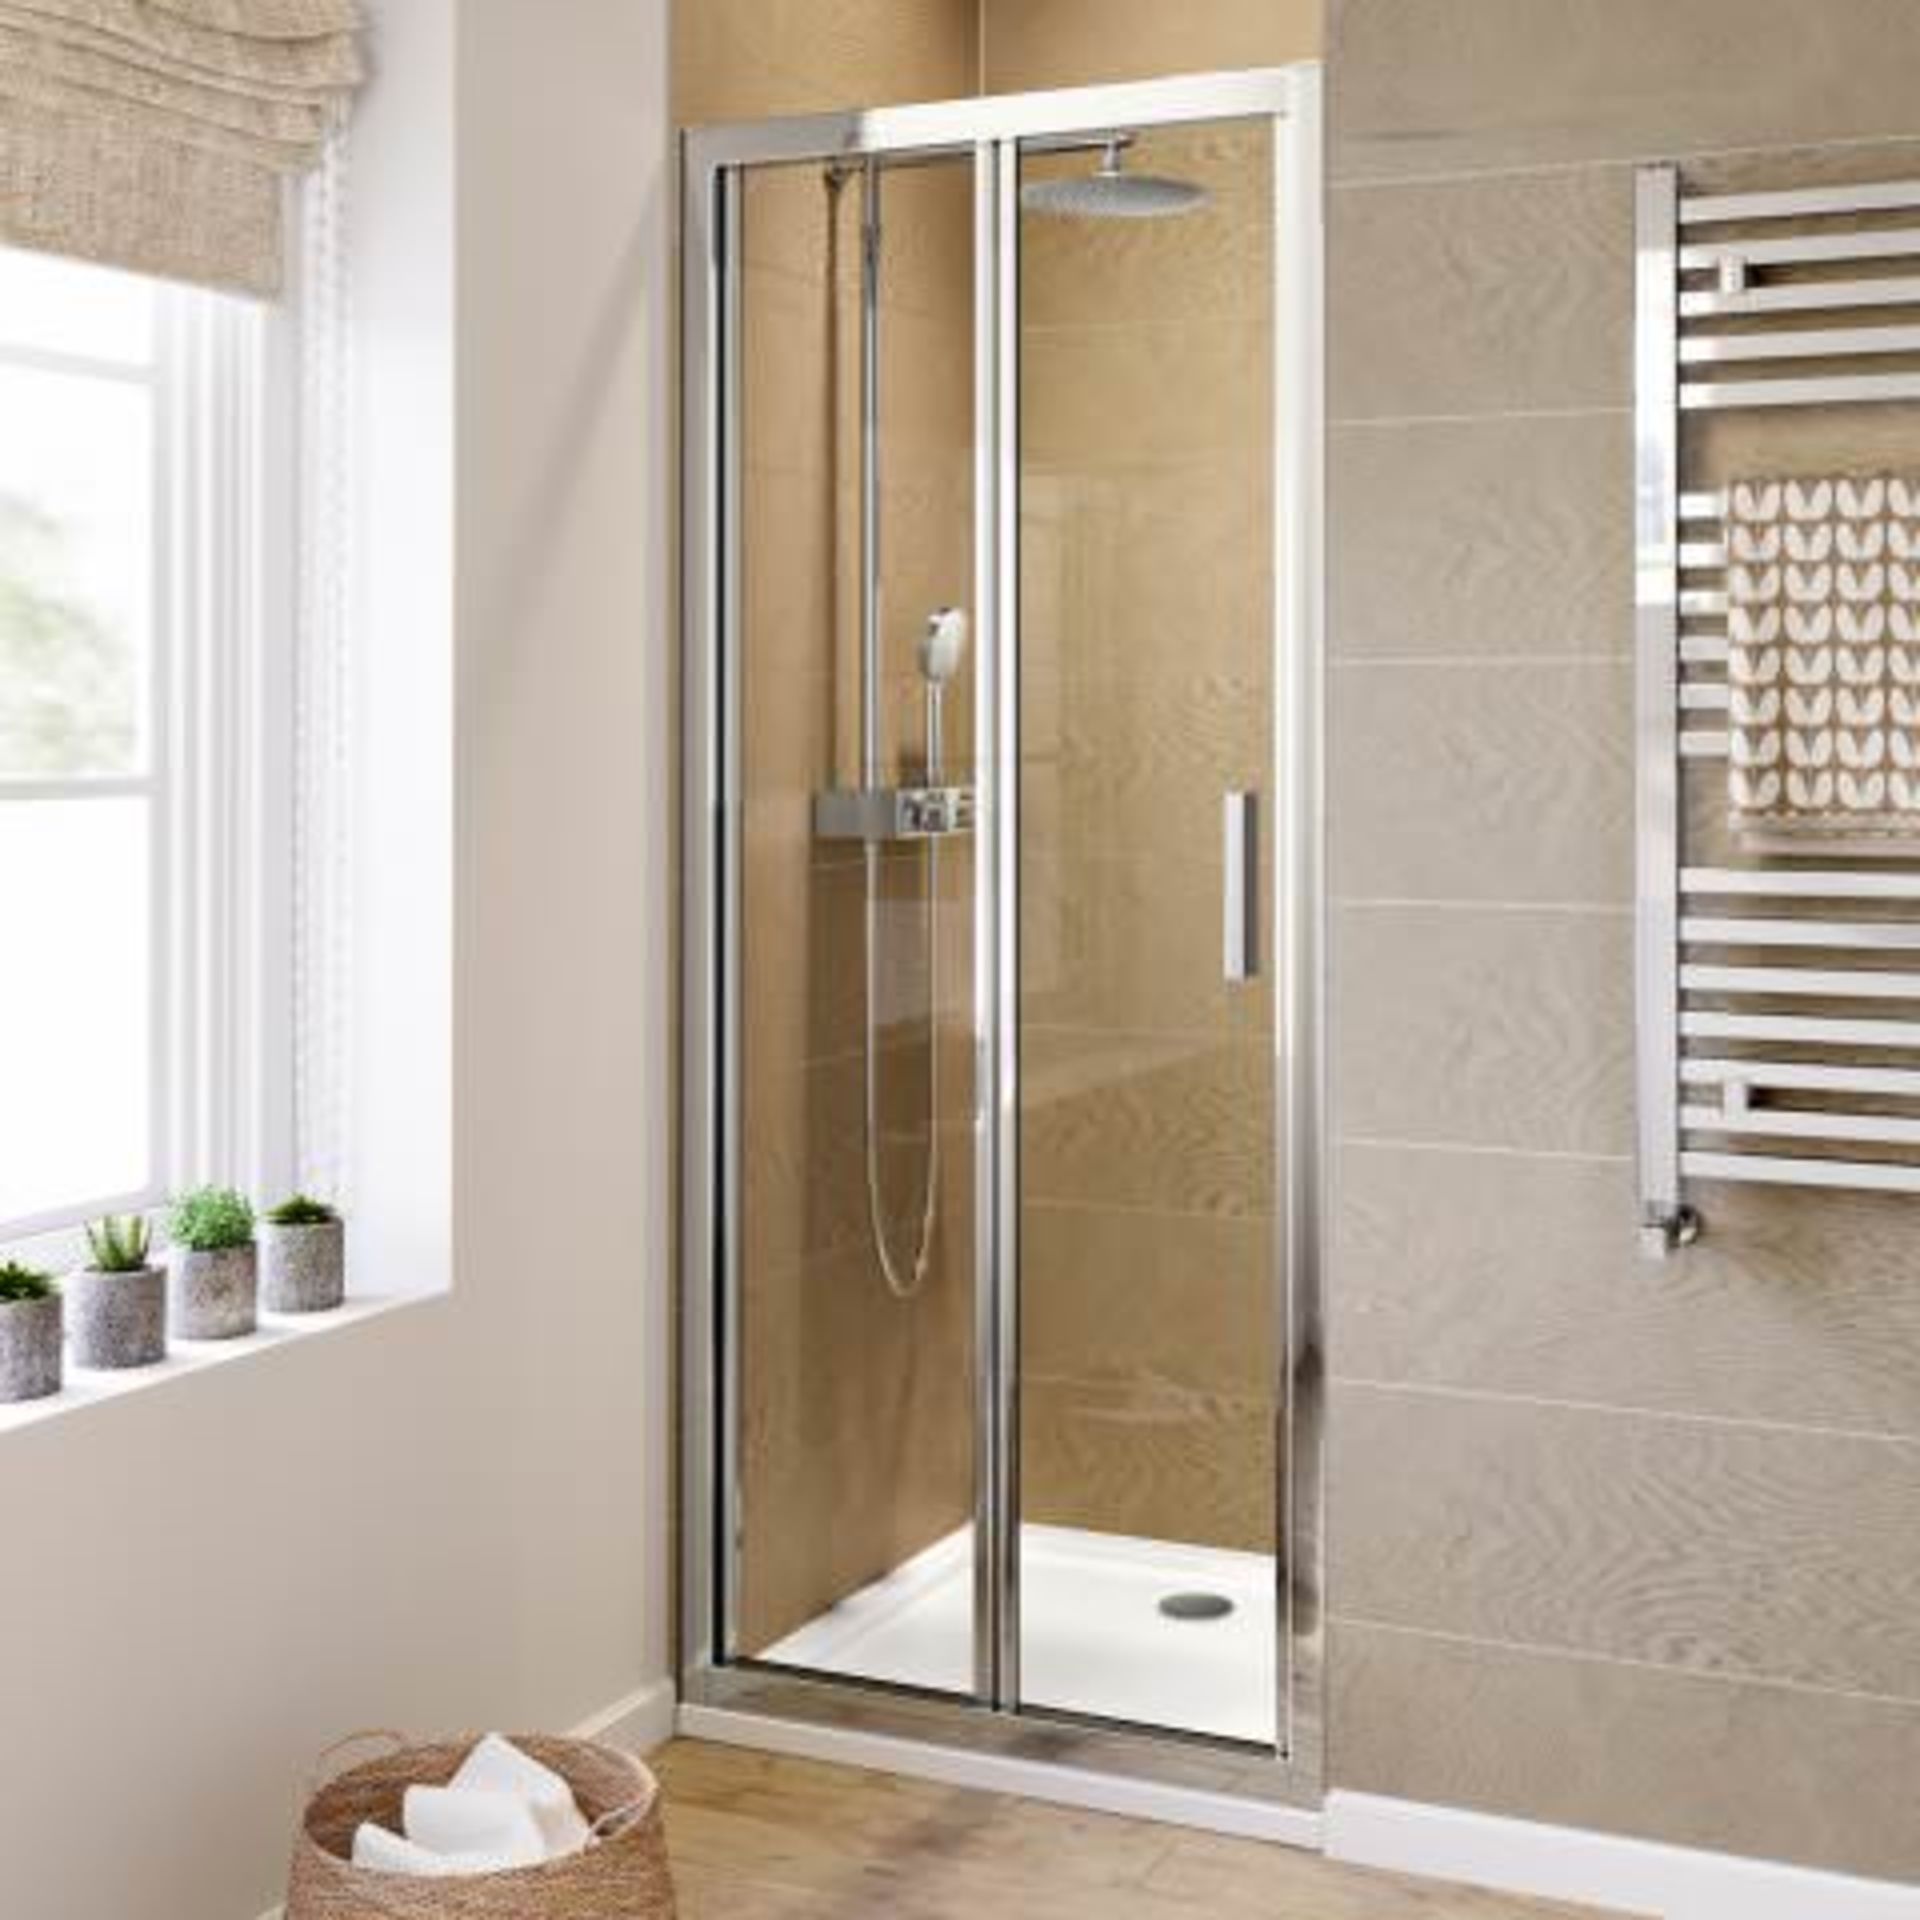 (K41) 900mm - 6mm - Elements EasyClean Bifold Shower Door. RRP £299.99. Essential Design Our - Image 3 of 4